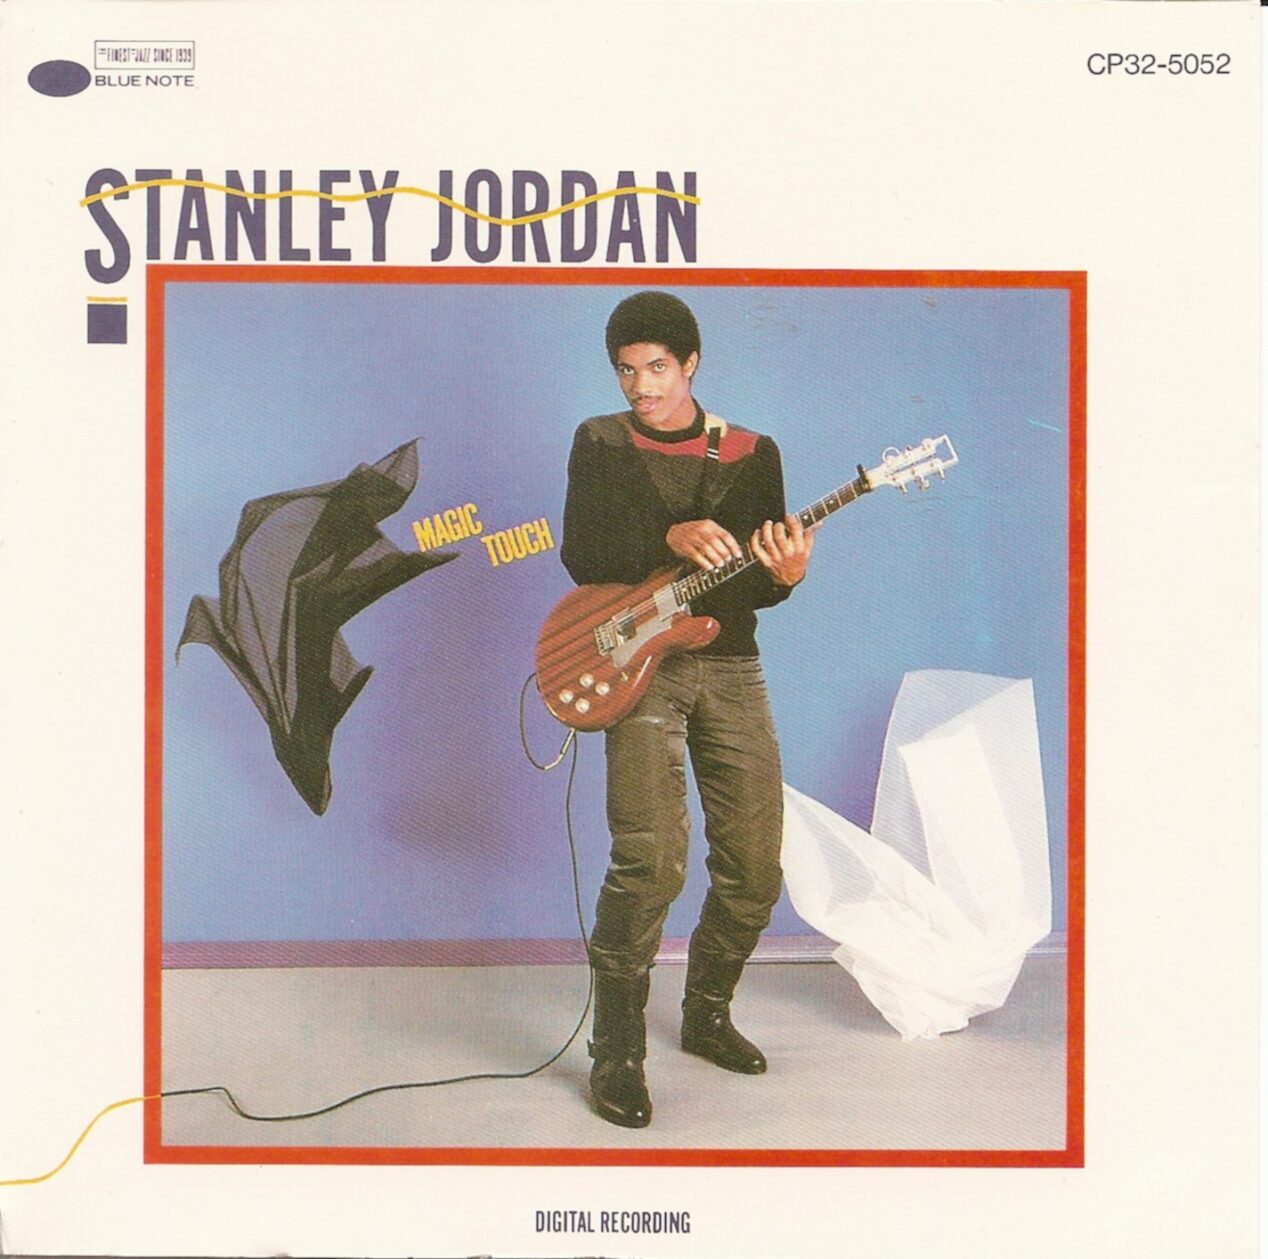 Stanley Jordan Magic Touch Album Cover